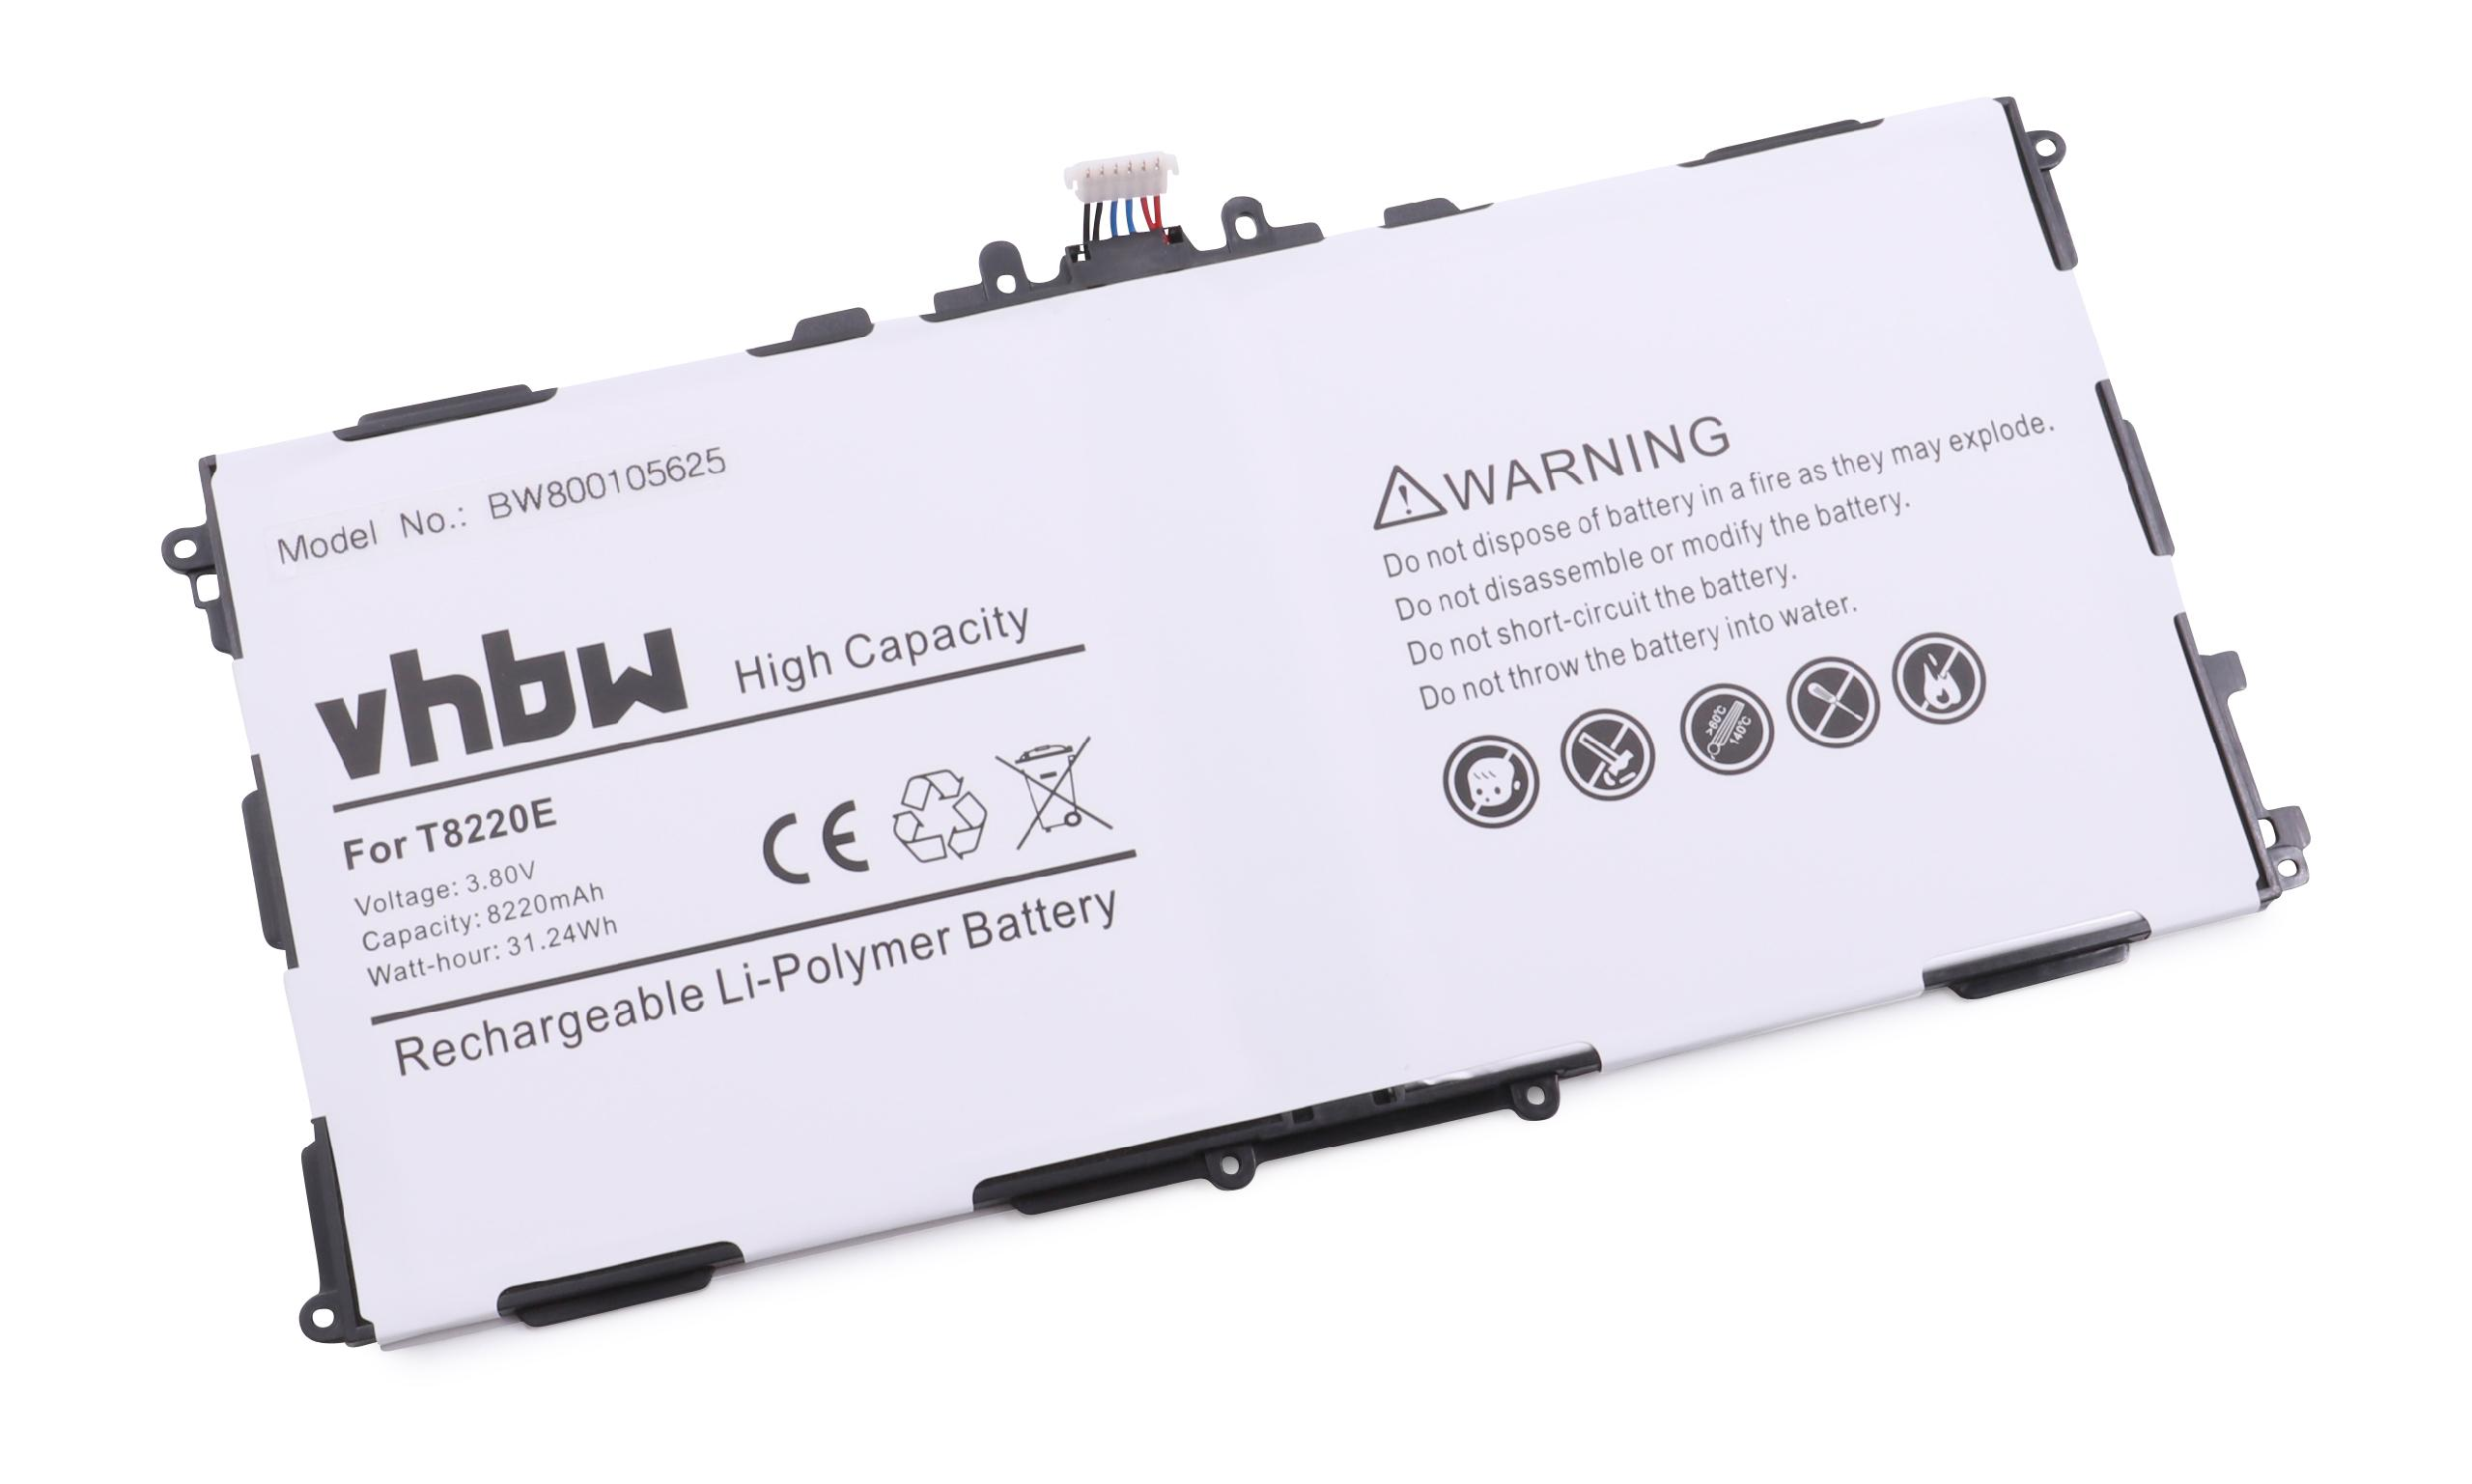 VHBW kompatibel mit Samsung Akku 10.1 3.8 10,1, Volt, - SM-P605 2014 Note SM-P602, 8220 Li-Polymer Edition 10.1 Tablet, Galaxy